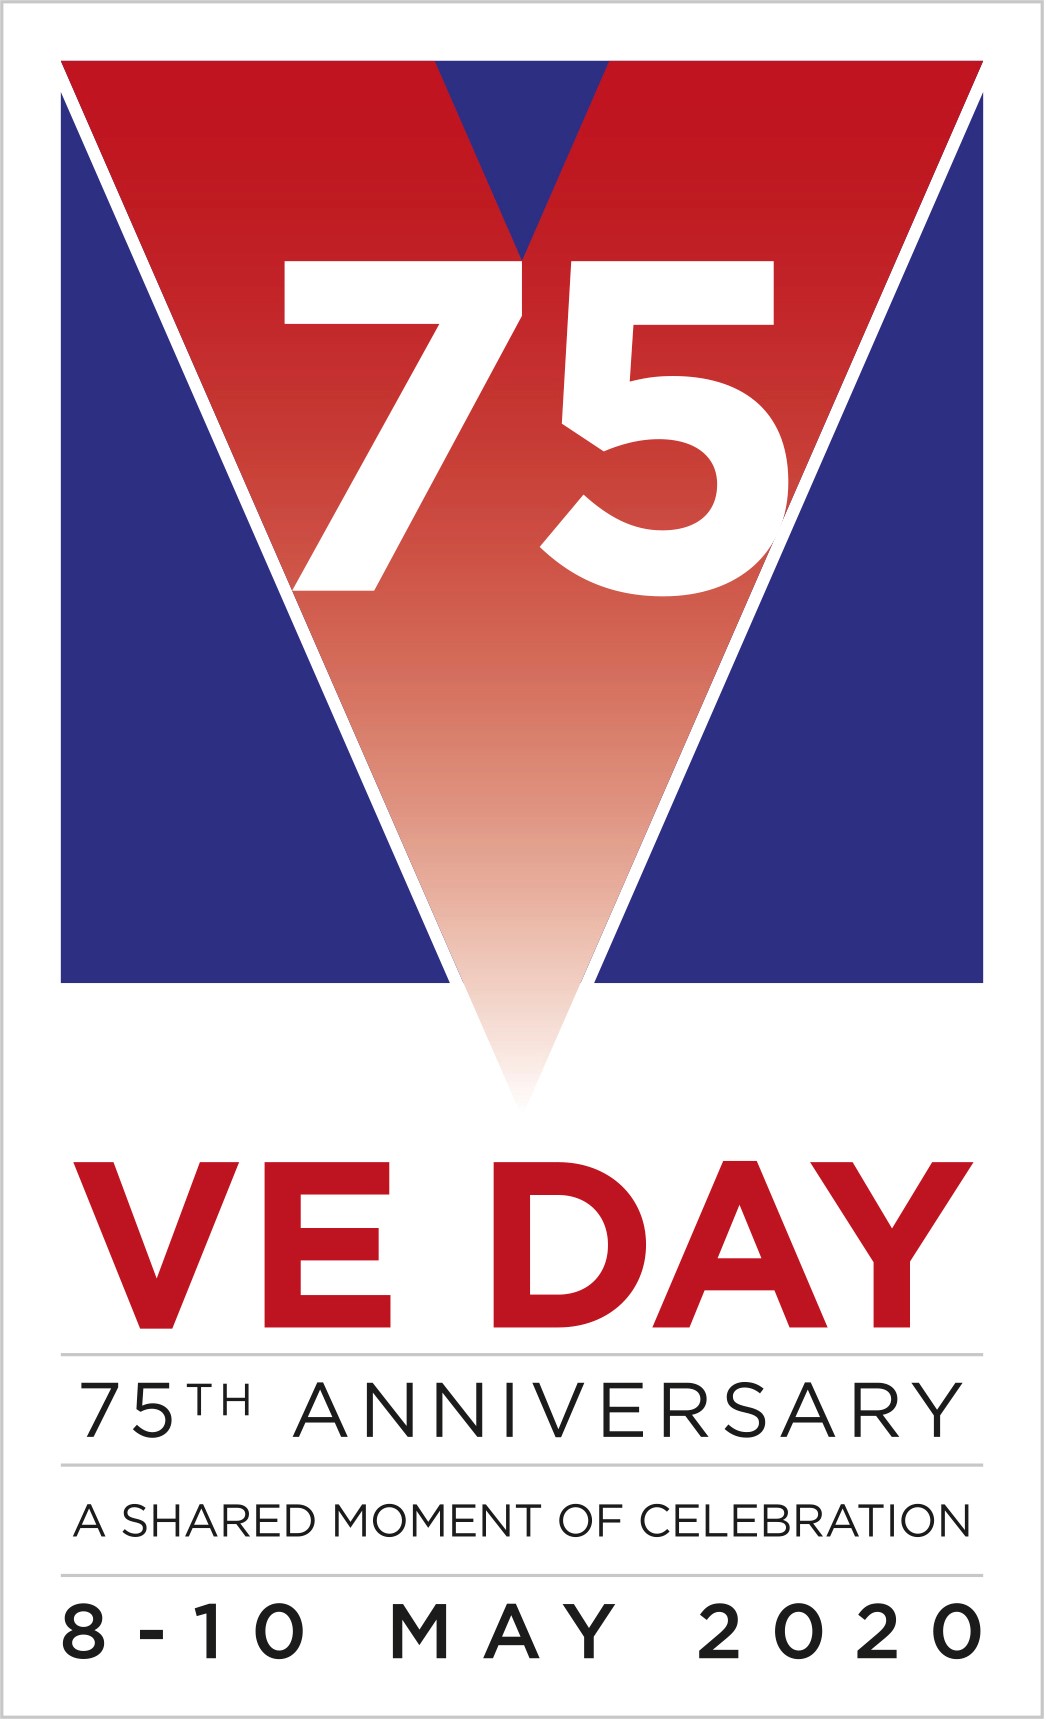 VE Day 75th anniversary logo